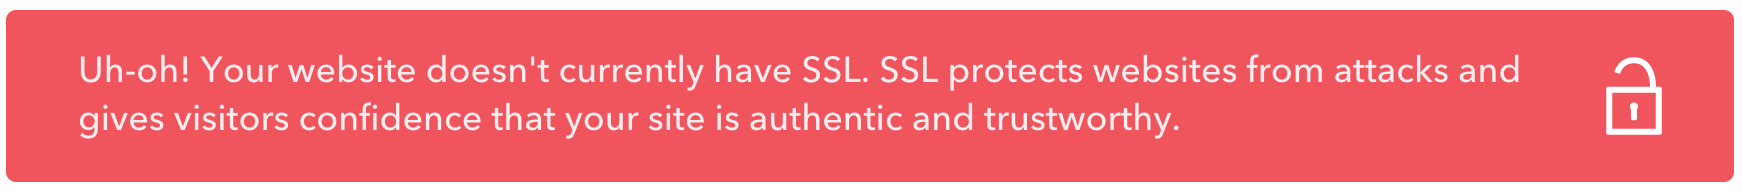 no ssl certificate warning message 